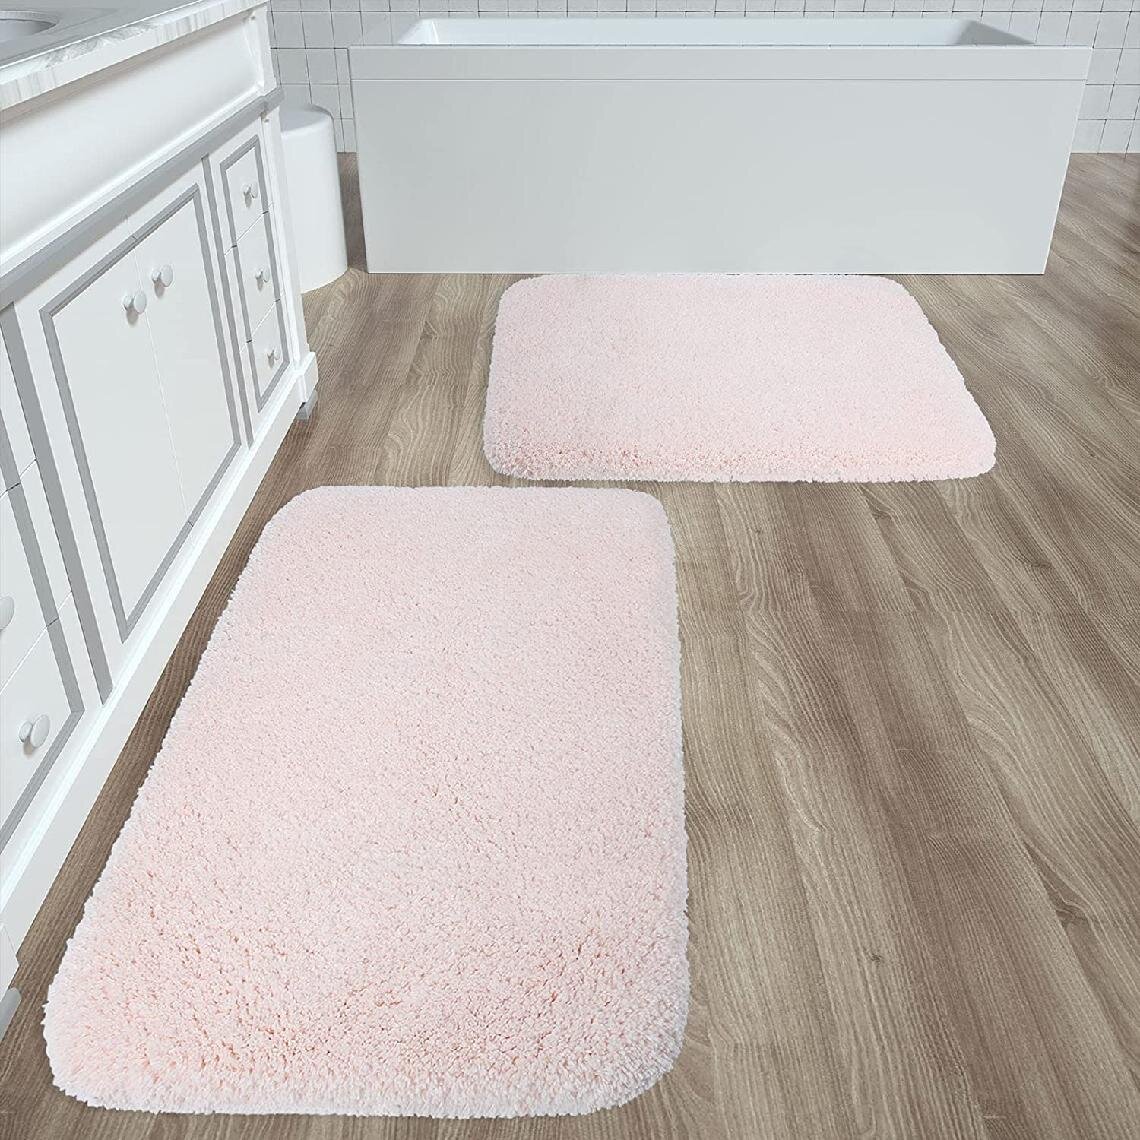 Bathroom Rug Non Slip Thick Bath Mat Water Absorbent Microfiber Soft Floor Mats 